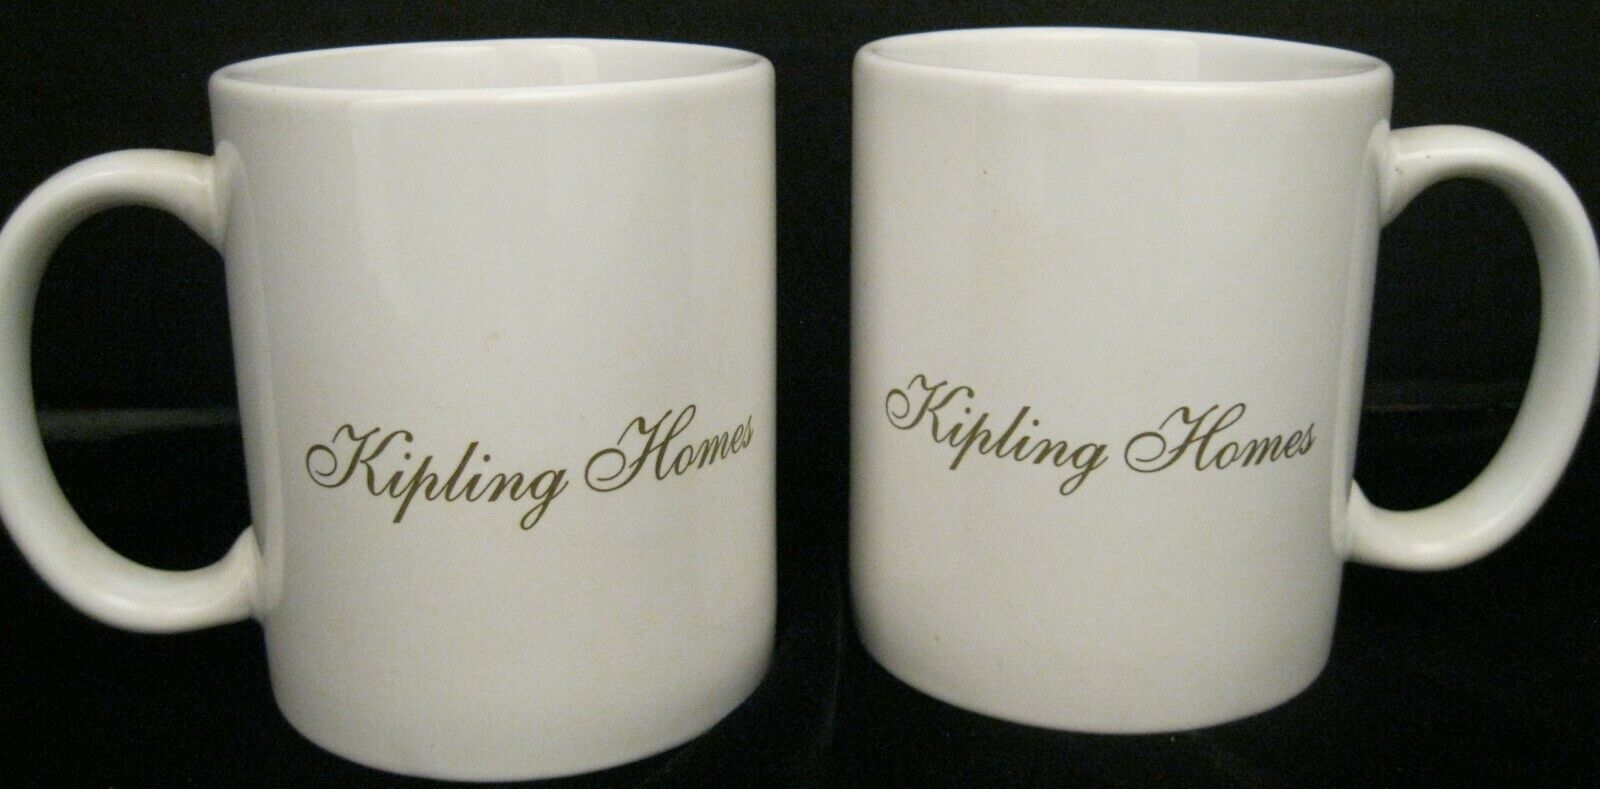 KIPLING HOMES  HOUSTON TEXAS  WHITE MUGS CUPS  FOR COFFEE OR TEA BY     HEADWIND